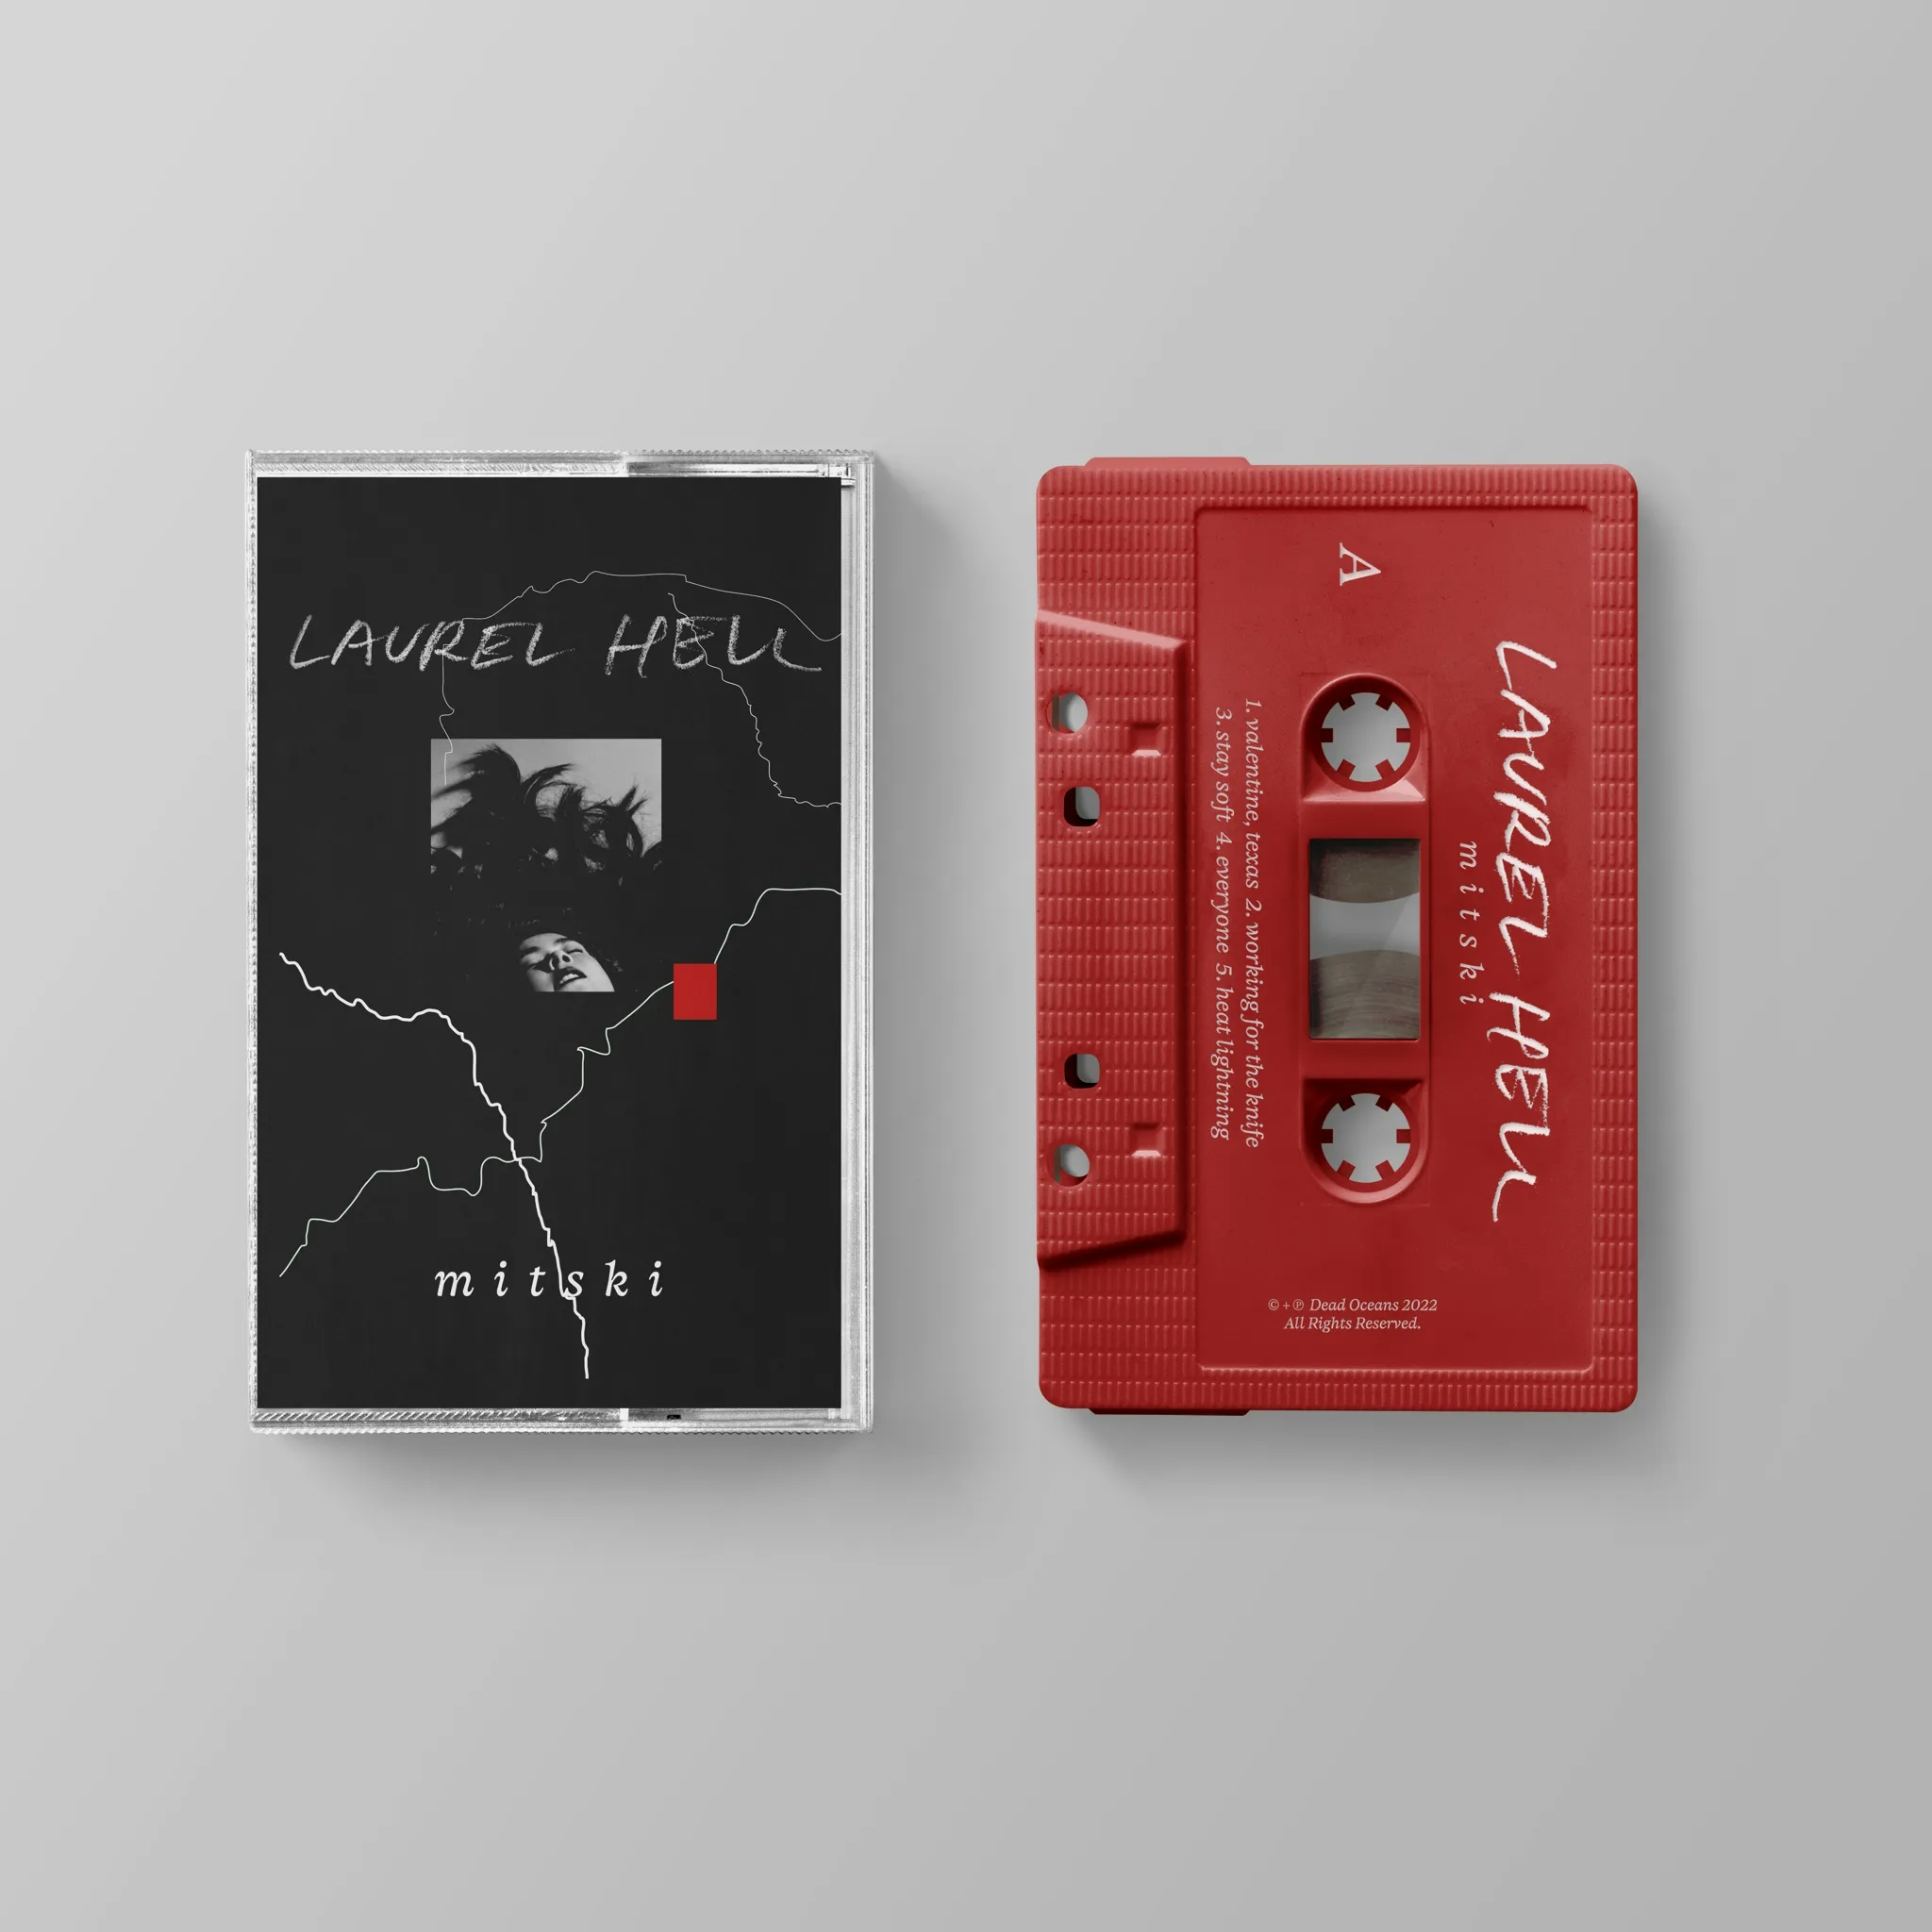 Album artwork for Laurel Hell by Mitski